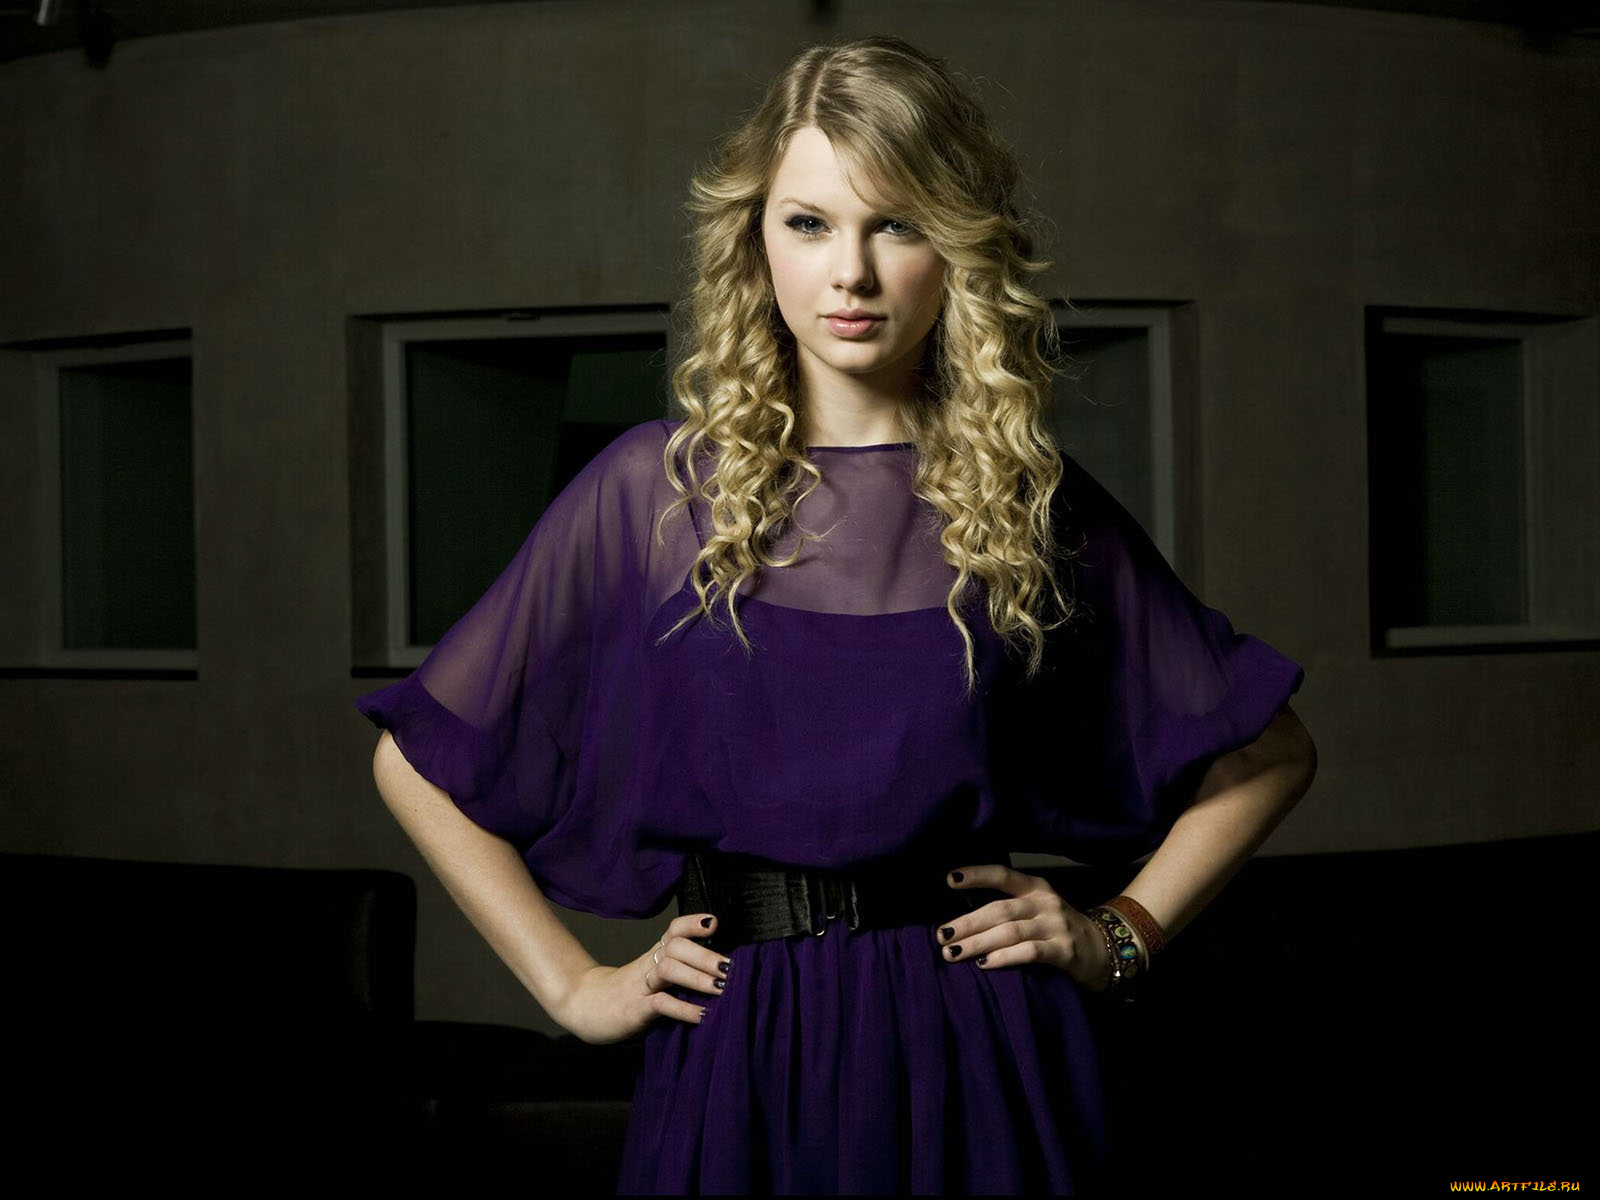 Taylor, Swift, девушки